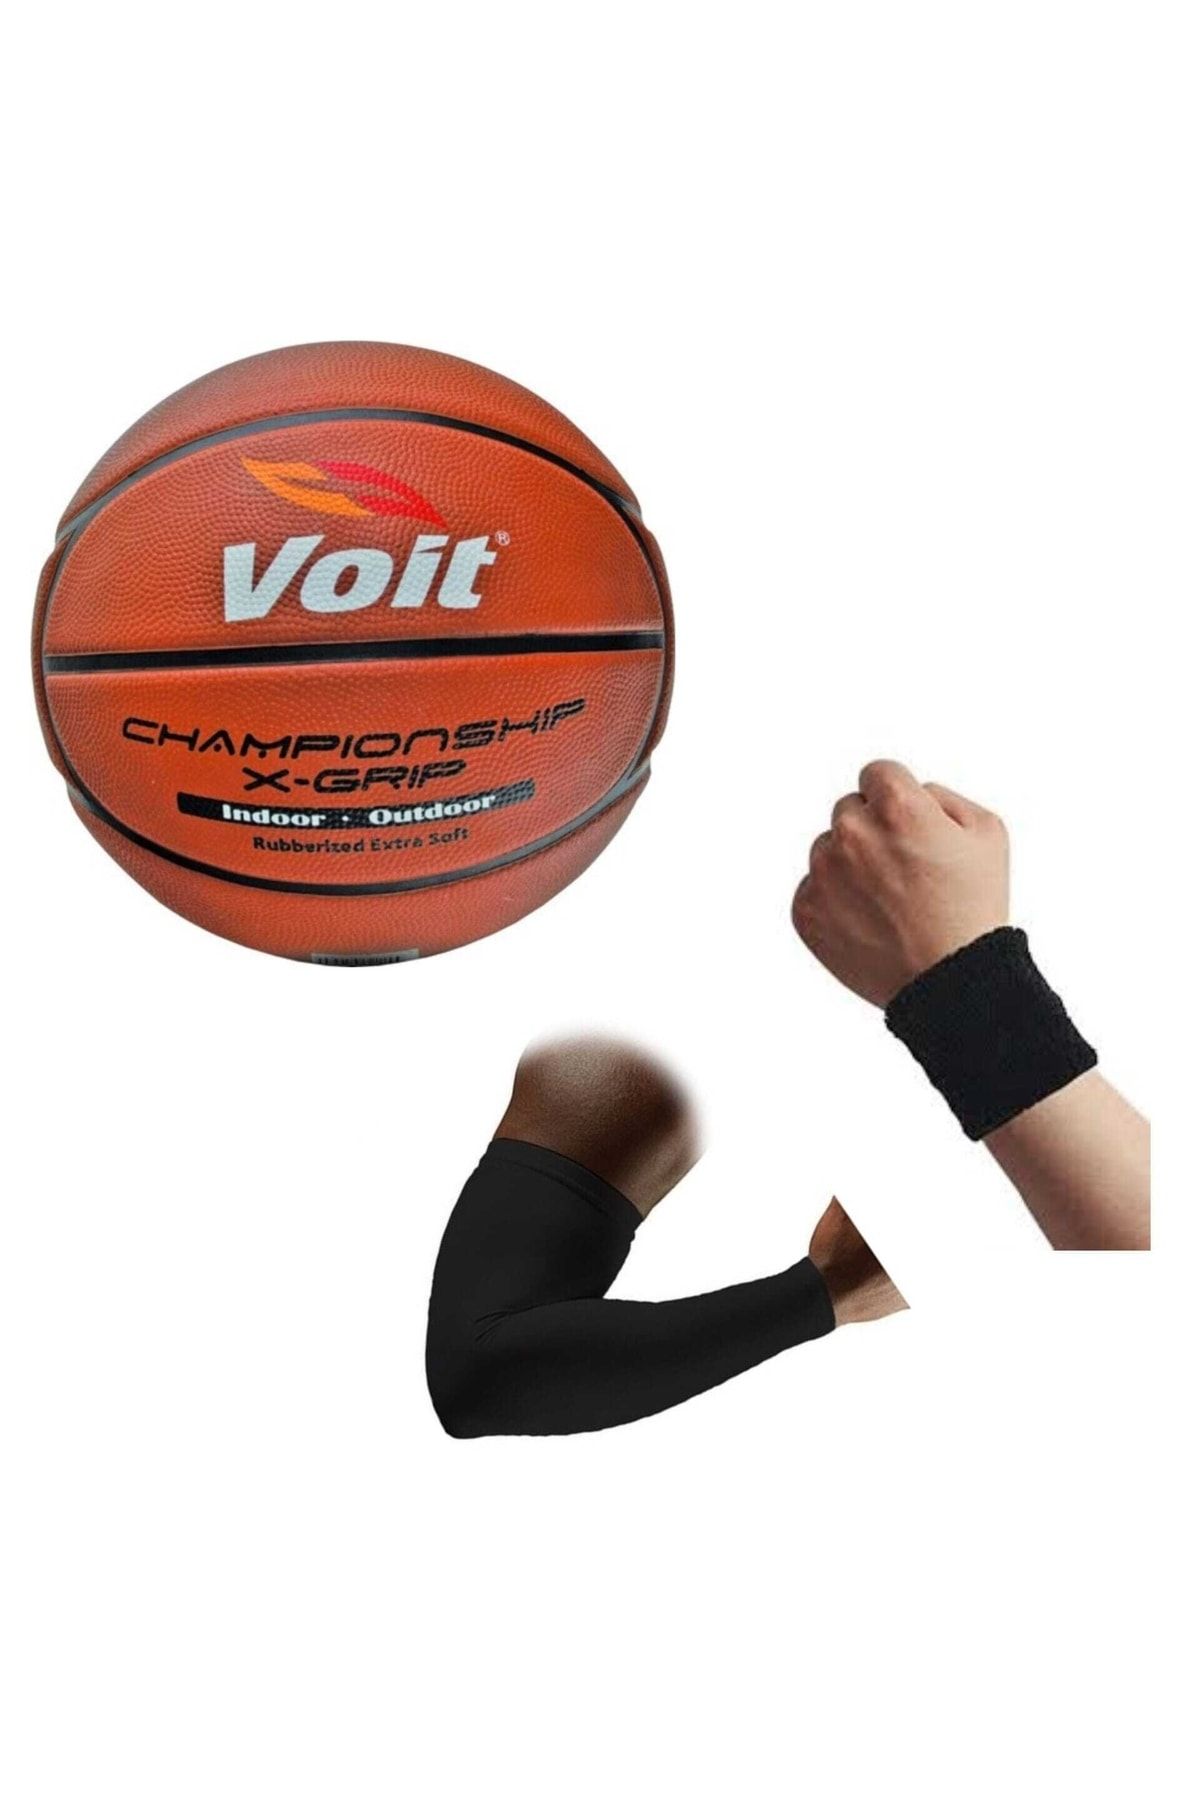 Voit Xgrip Profesyonel 6 Numara Basketbol Topu +basketbol Kolluğu+ Sporcu Havlu Bilekliği